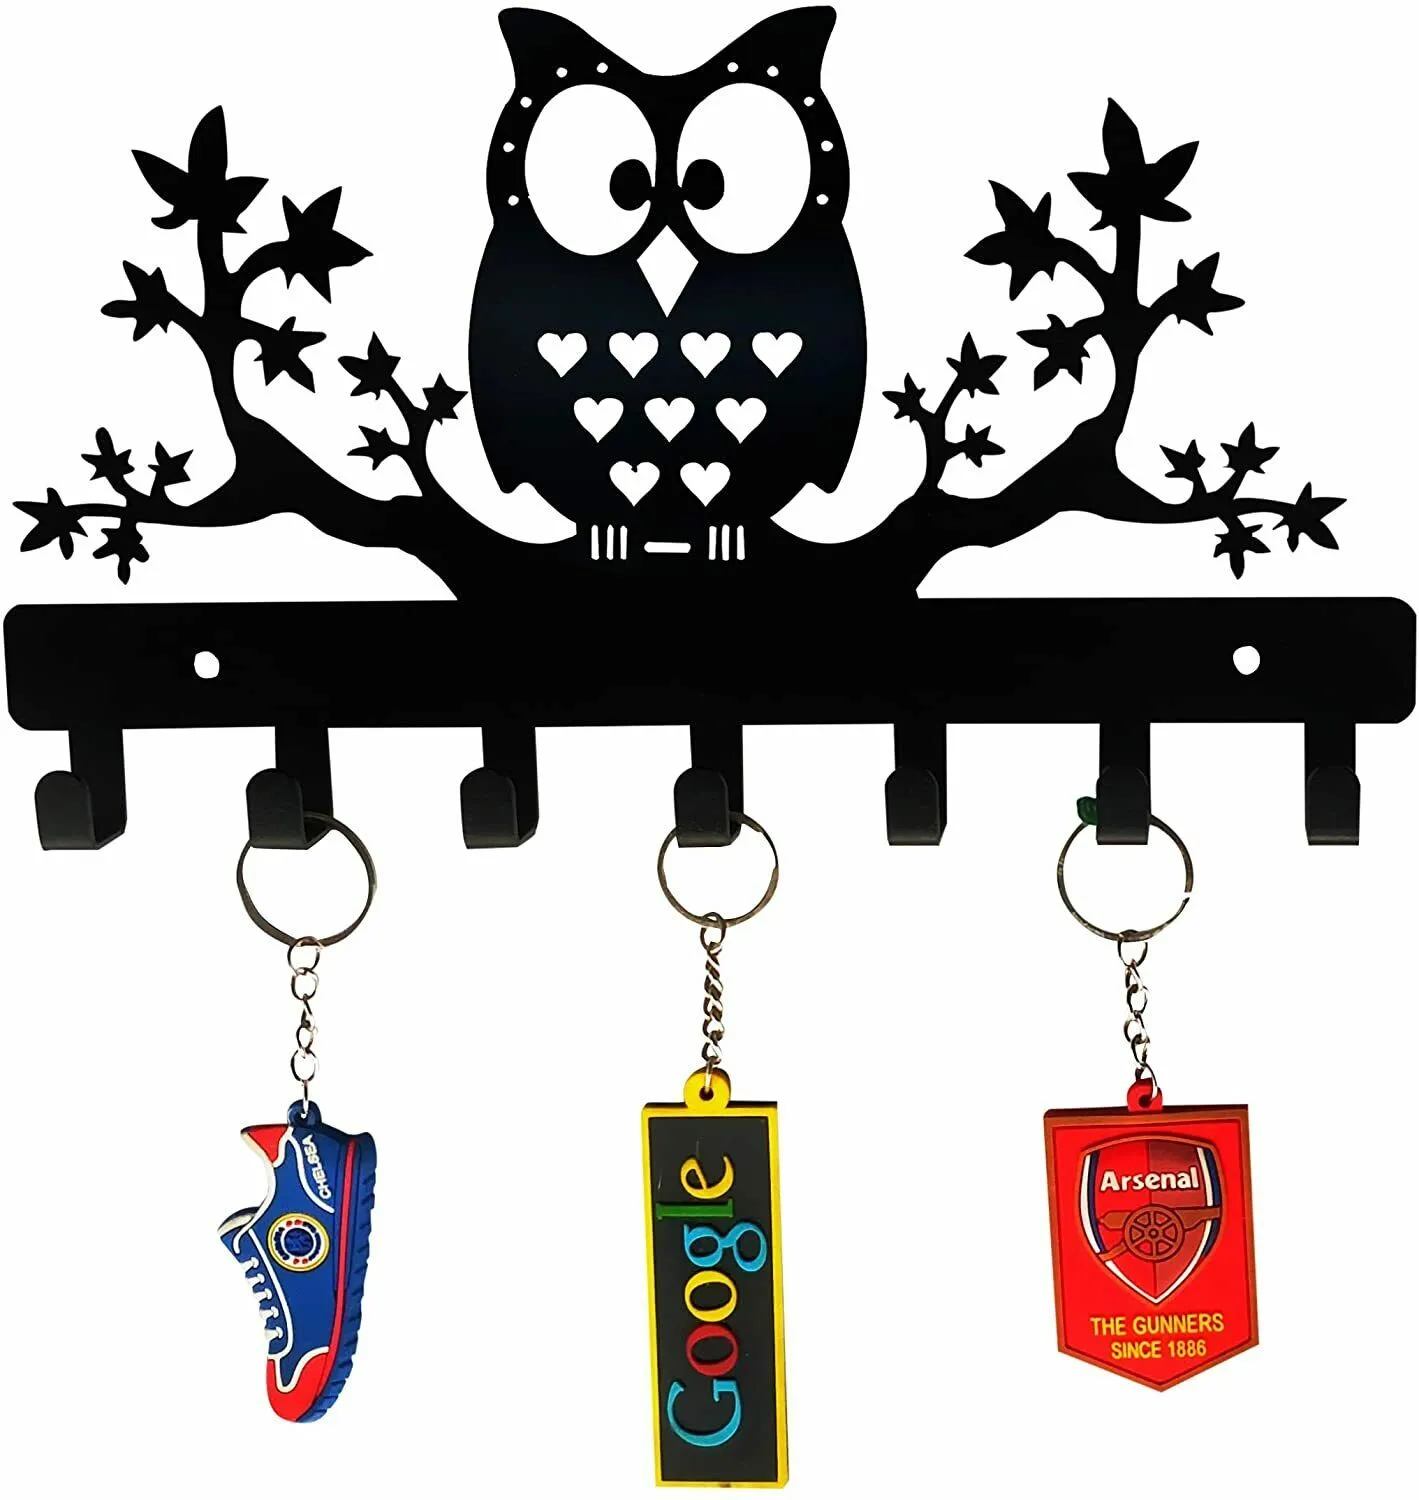 Uggla på Maple Trees Steel Key Holder, Steel Key Rack, Metal Owl Key Hanger